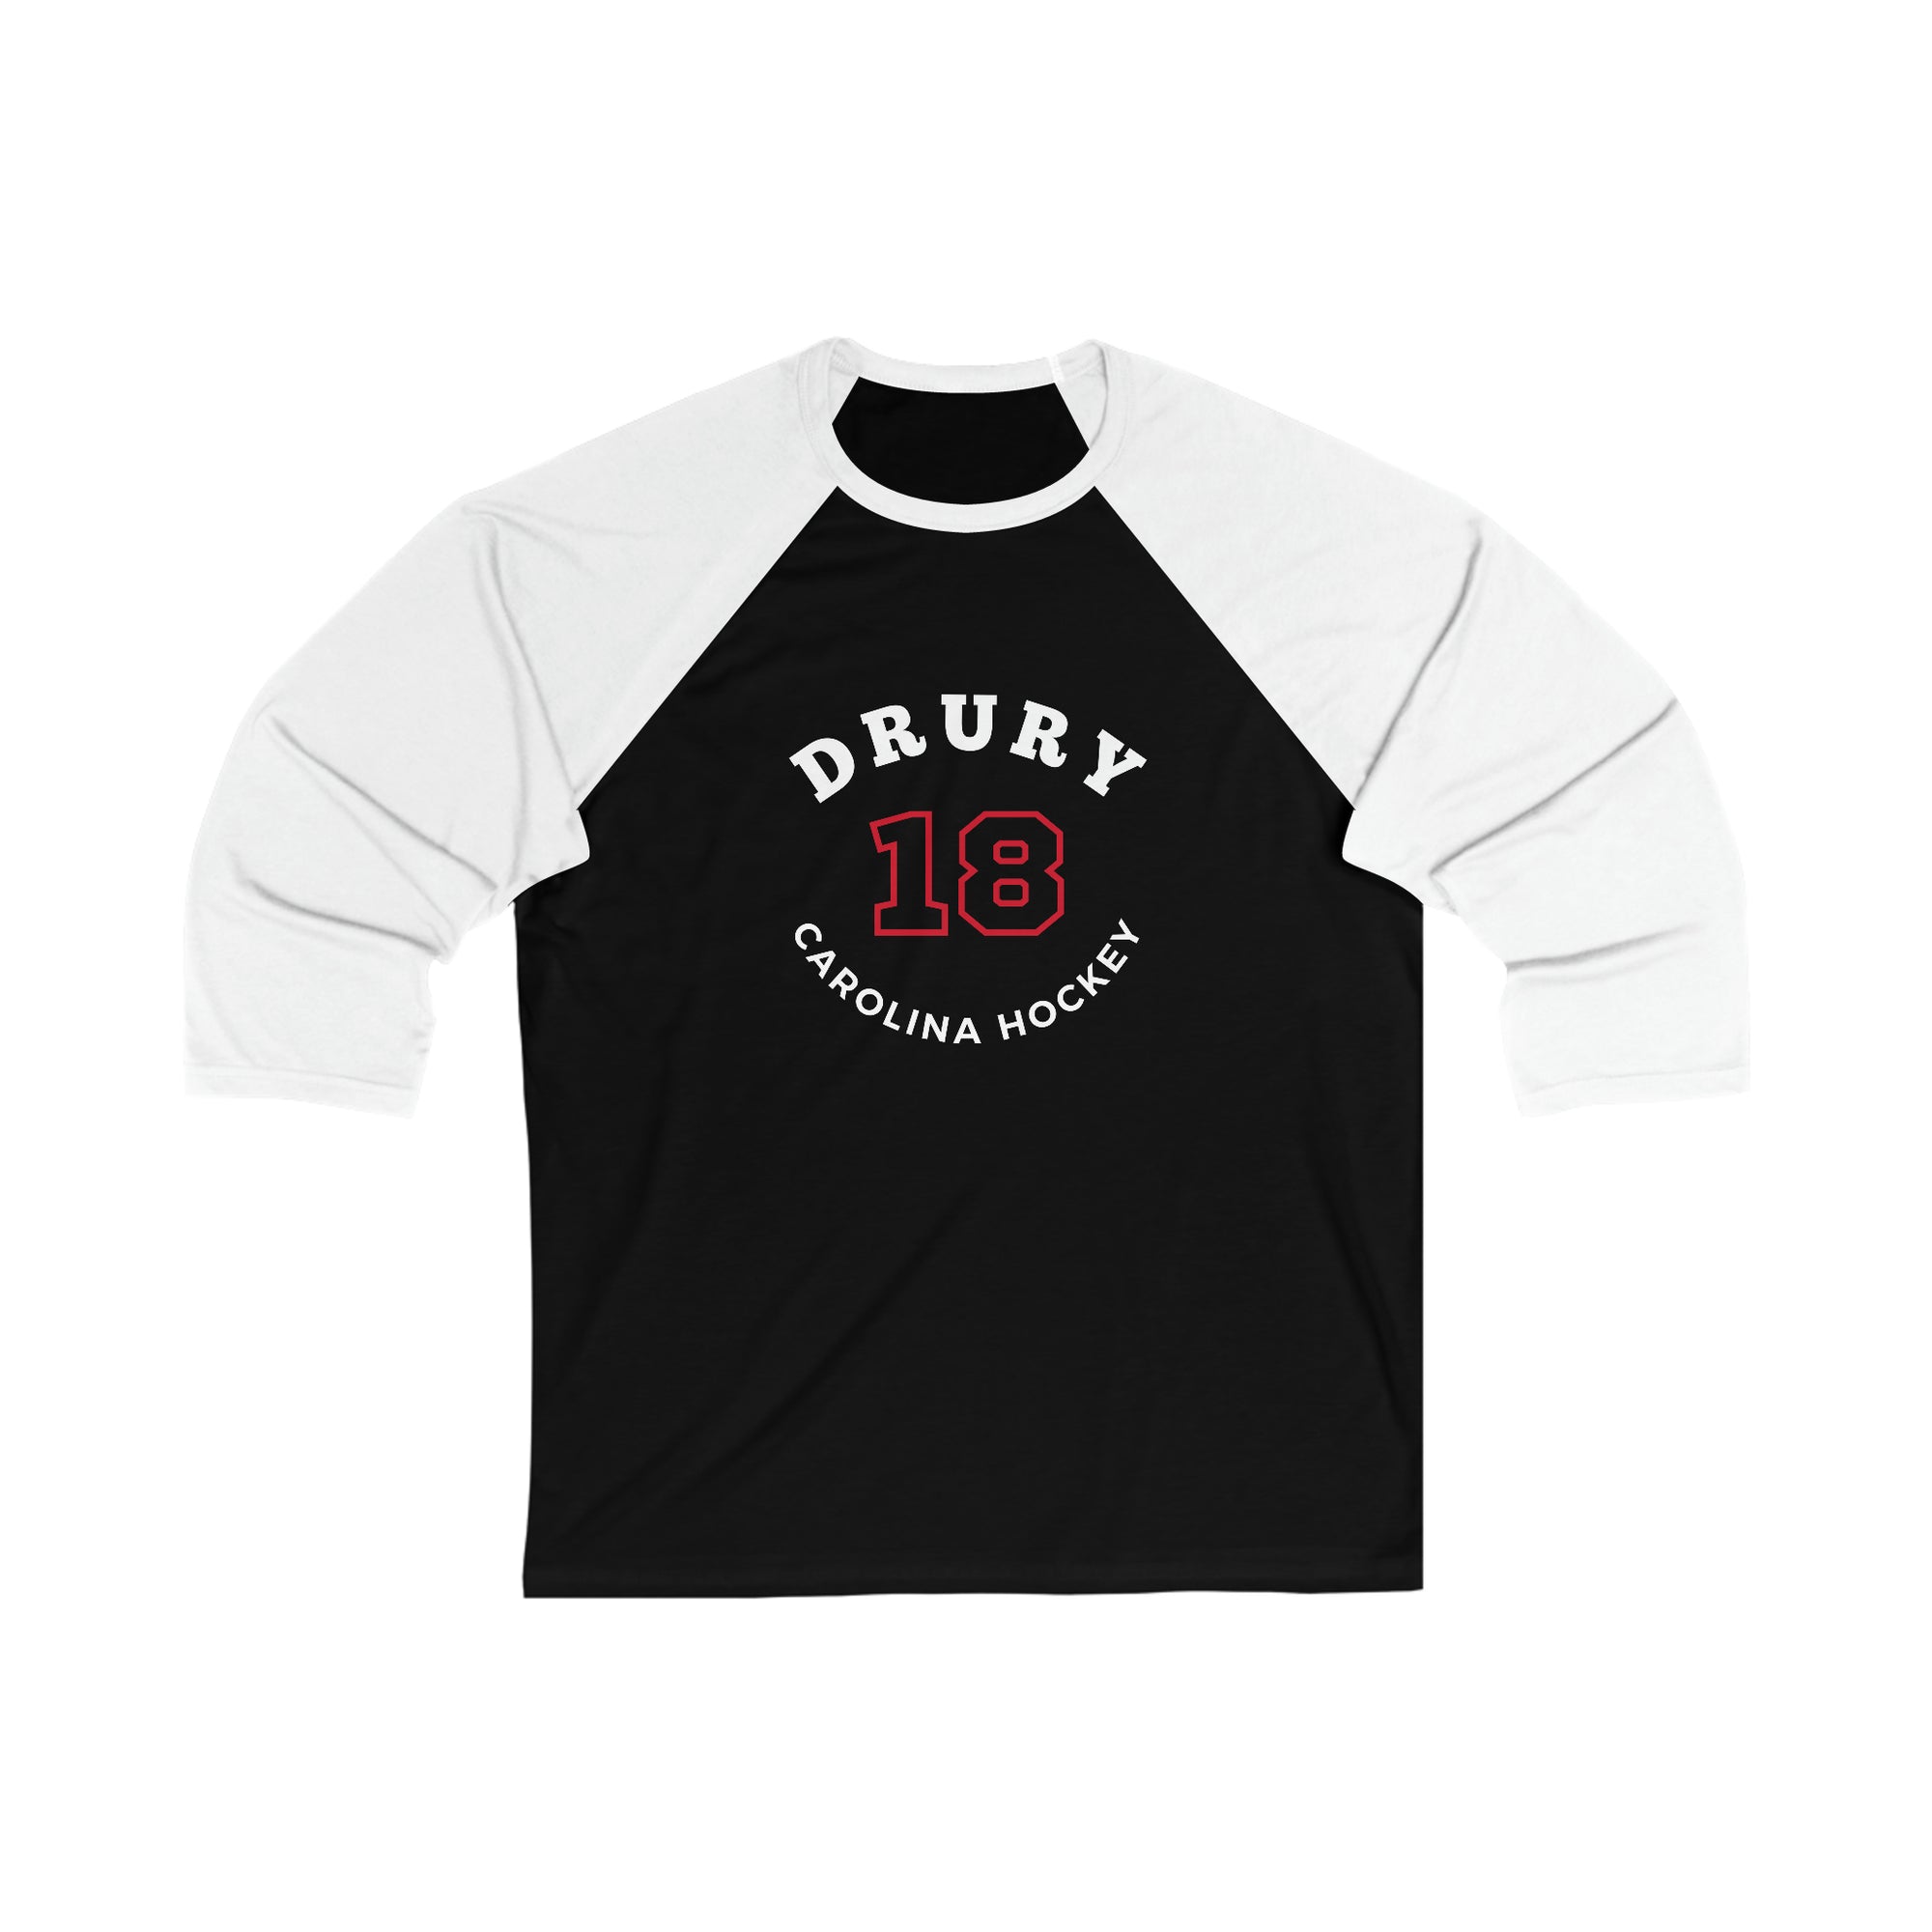 Drury 18 Carolina Hockey Number Arch Design Unisex Tri-Blend 3/4 Sleeve Raglan Baseball Shirt